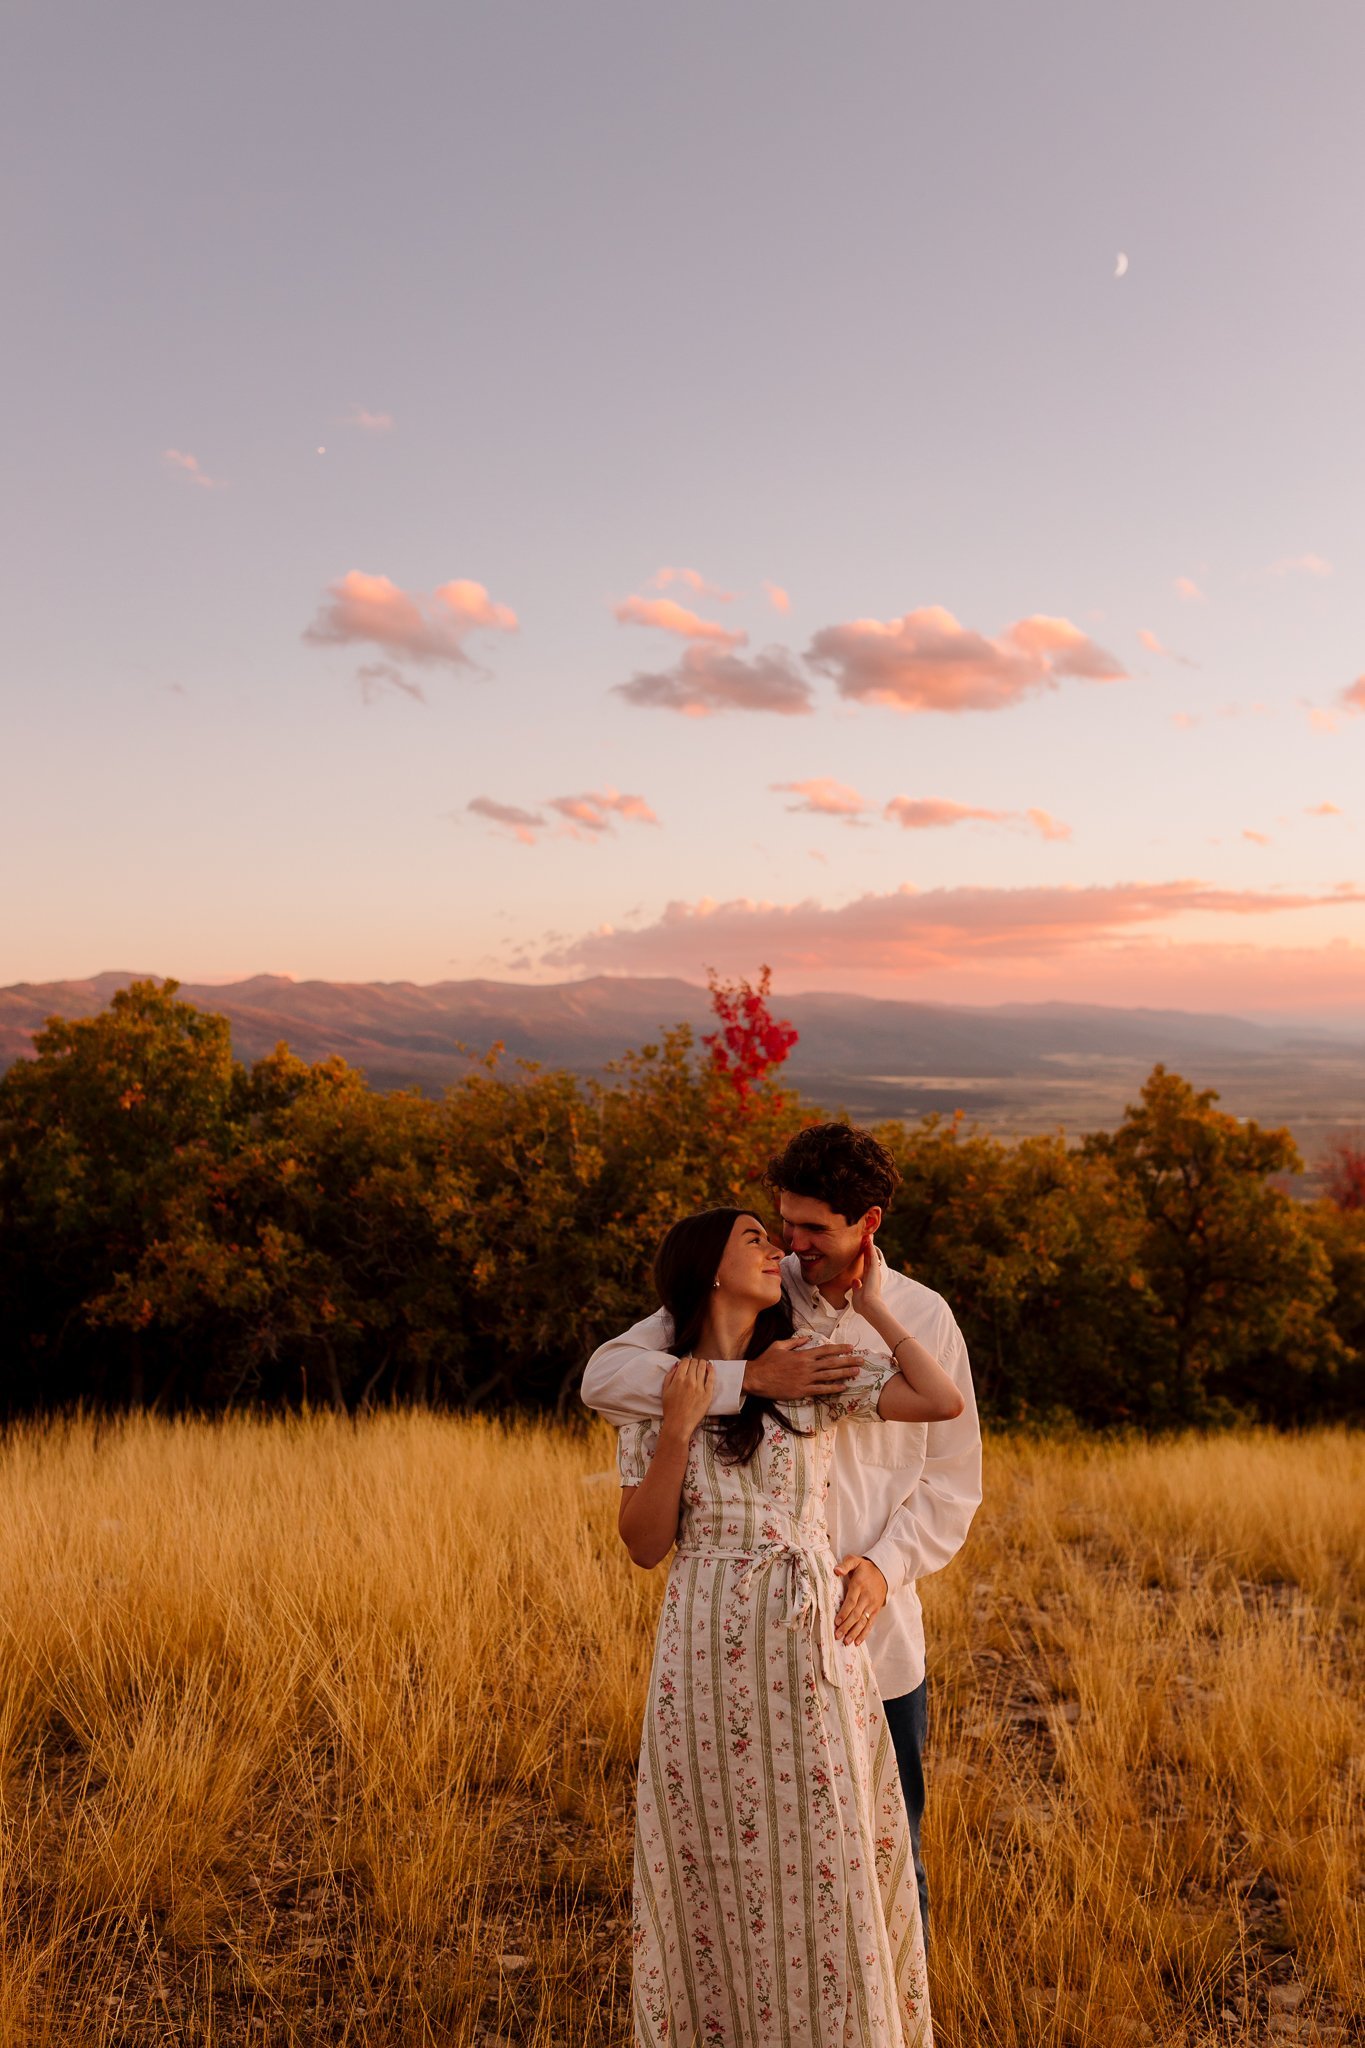 Utah+Couples+-+Mountain+Sunset+Session+-+Anna+Hurley+Photography+-+Chilliwack+(10).jpg